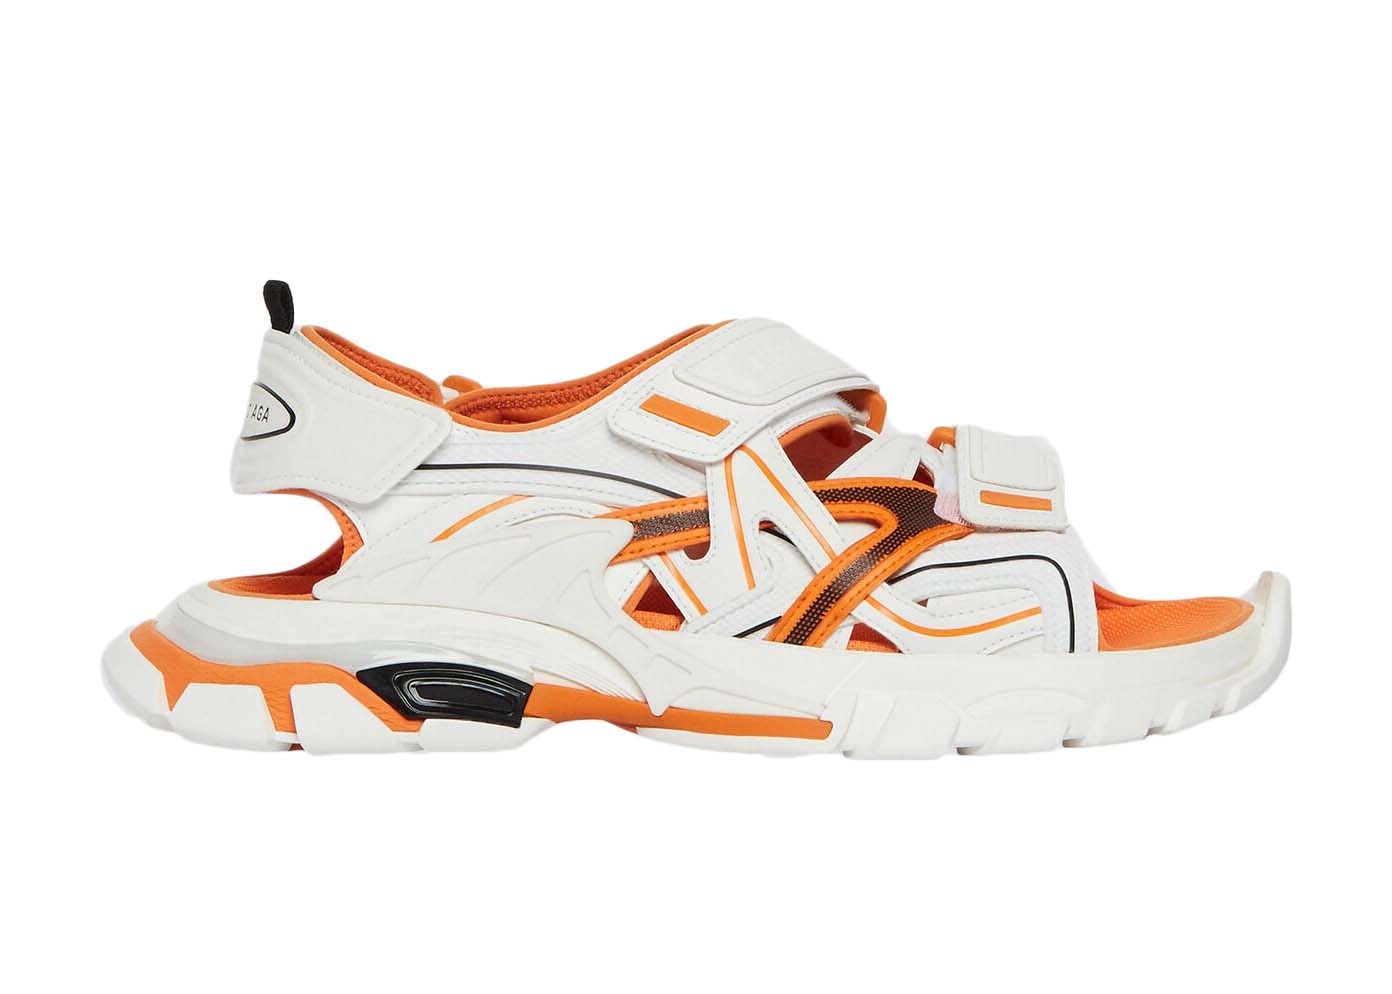 Balenciaga Track Sneaker White Orange  GOAT